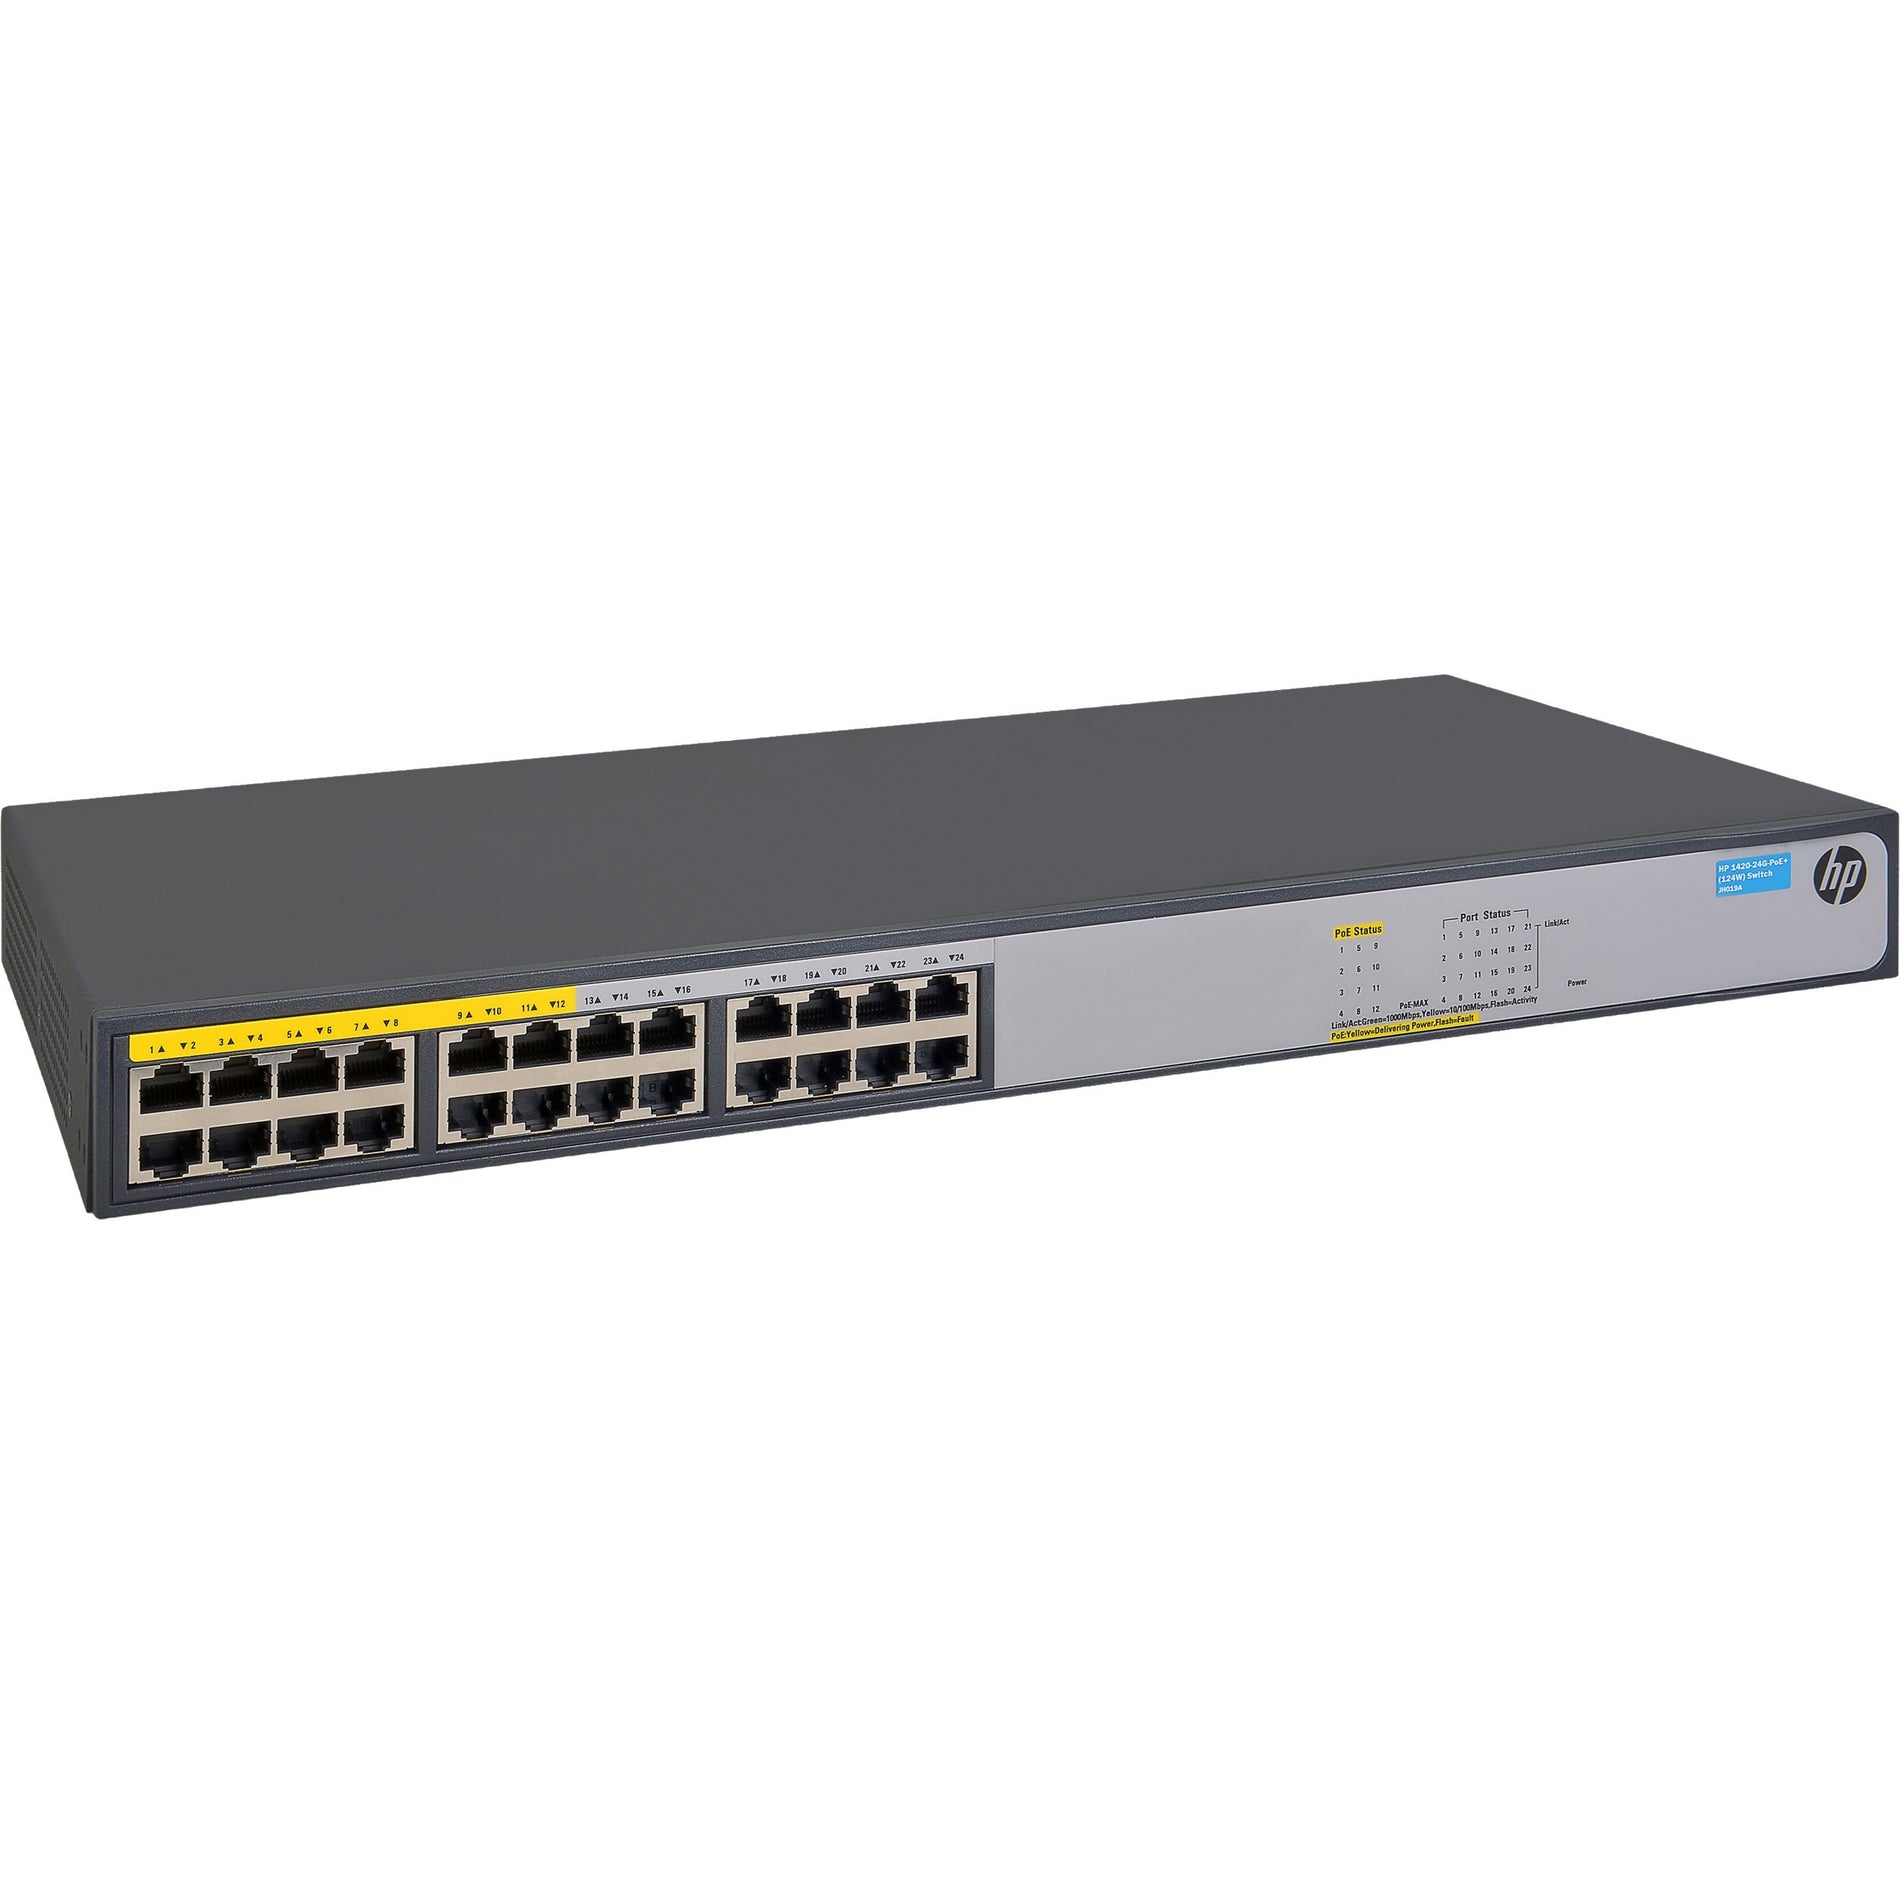 HPE 1420-24G-PoE+ (124W) Switch, 24 Gigabit Ethernet Network Ports